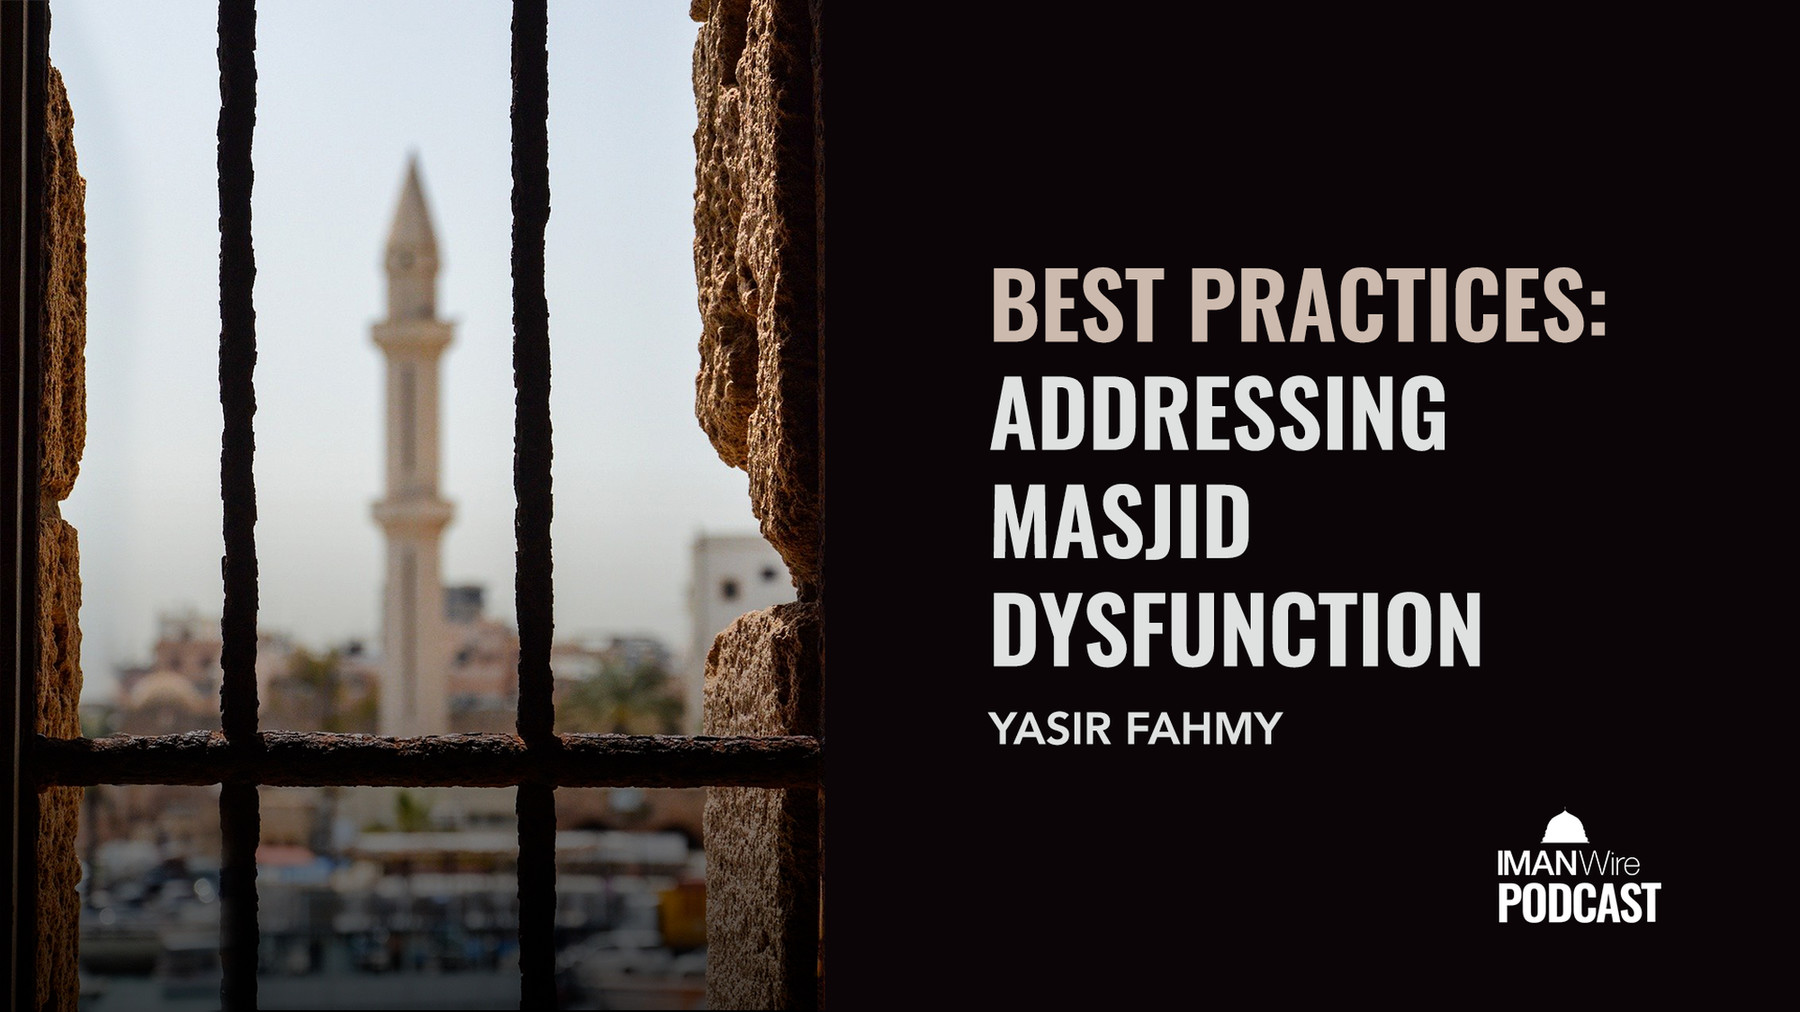 20210106 Best Practices Addressing Masjid Dysfunction THUMBNAIL 1920x1080